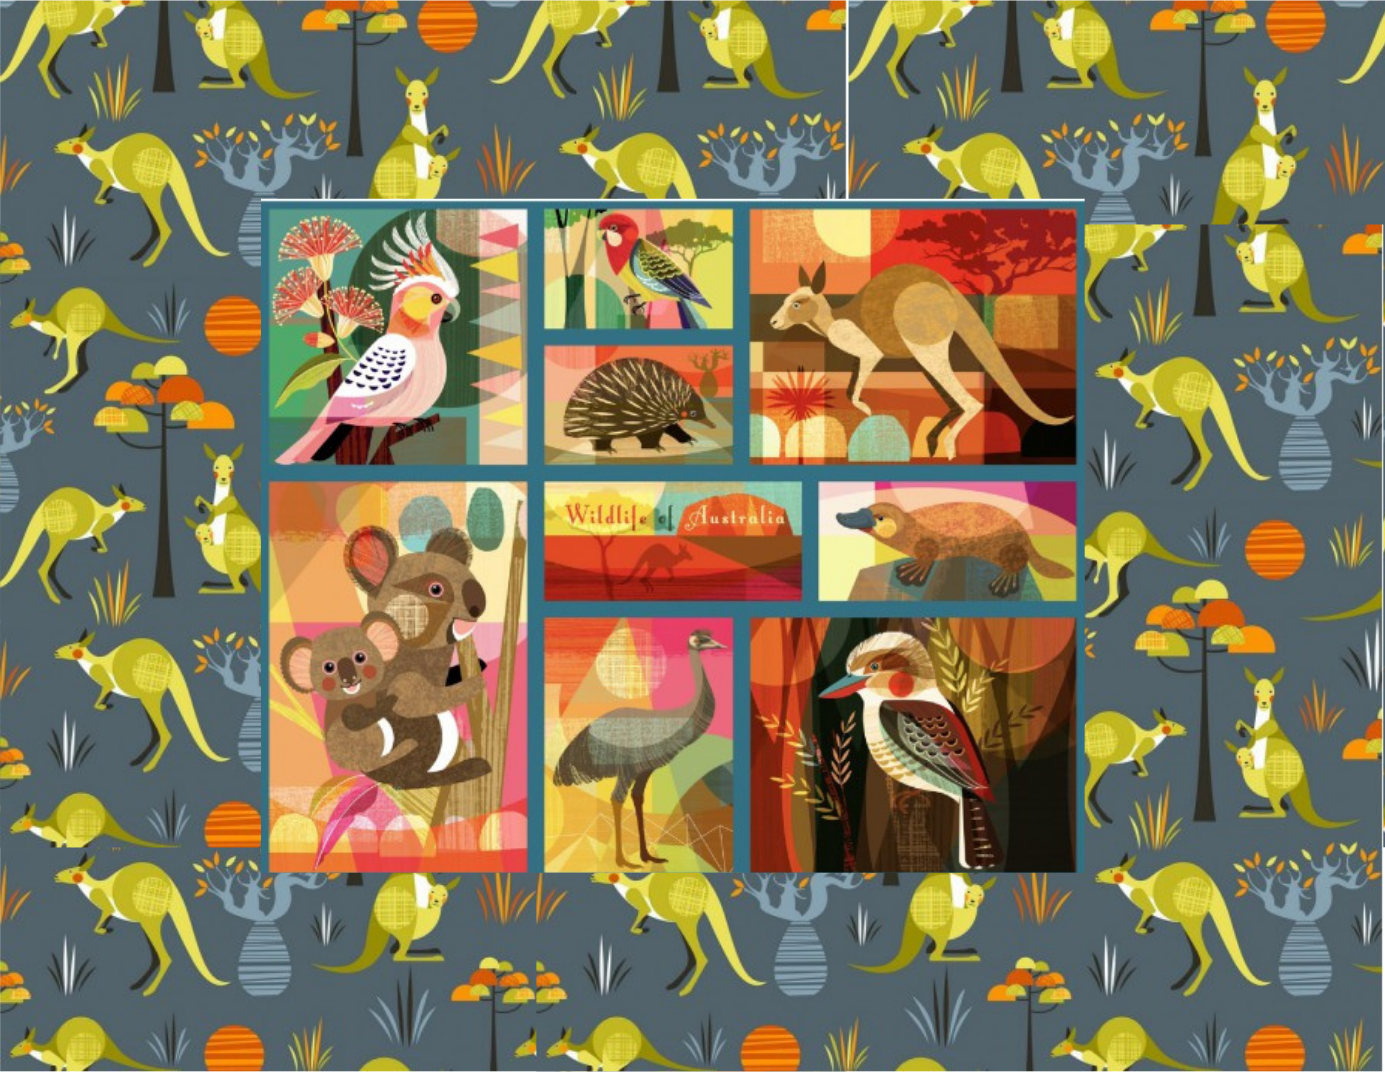 Panel de vida silvestre de Australia por Ellen Giggenbach